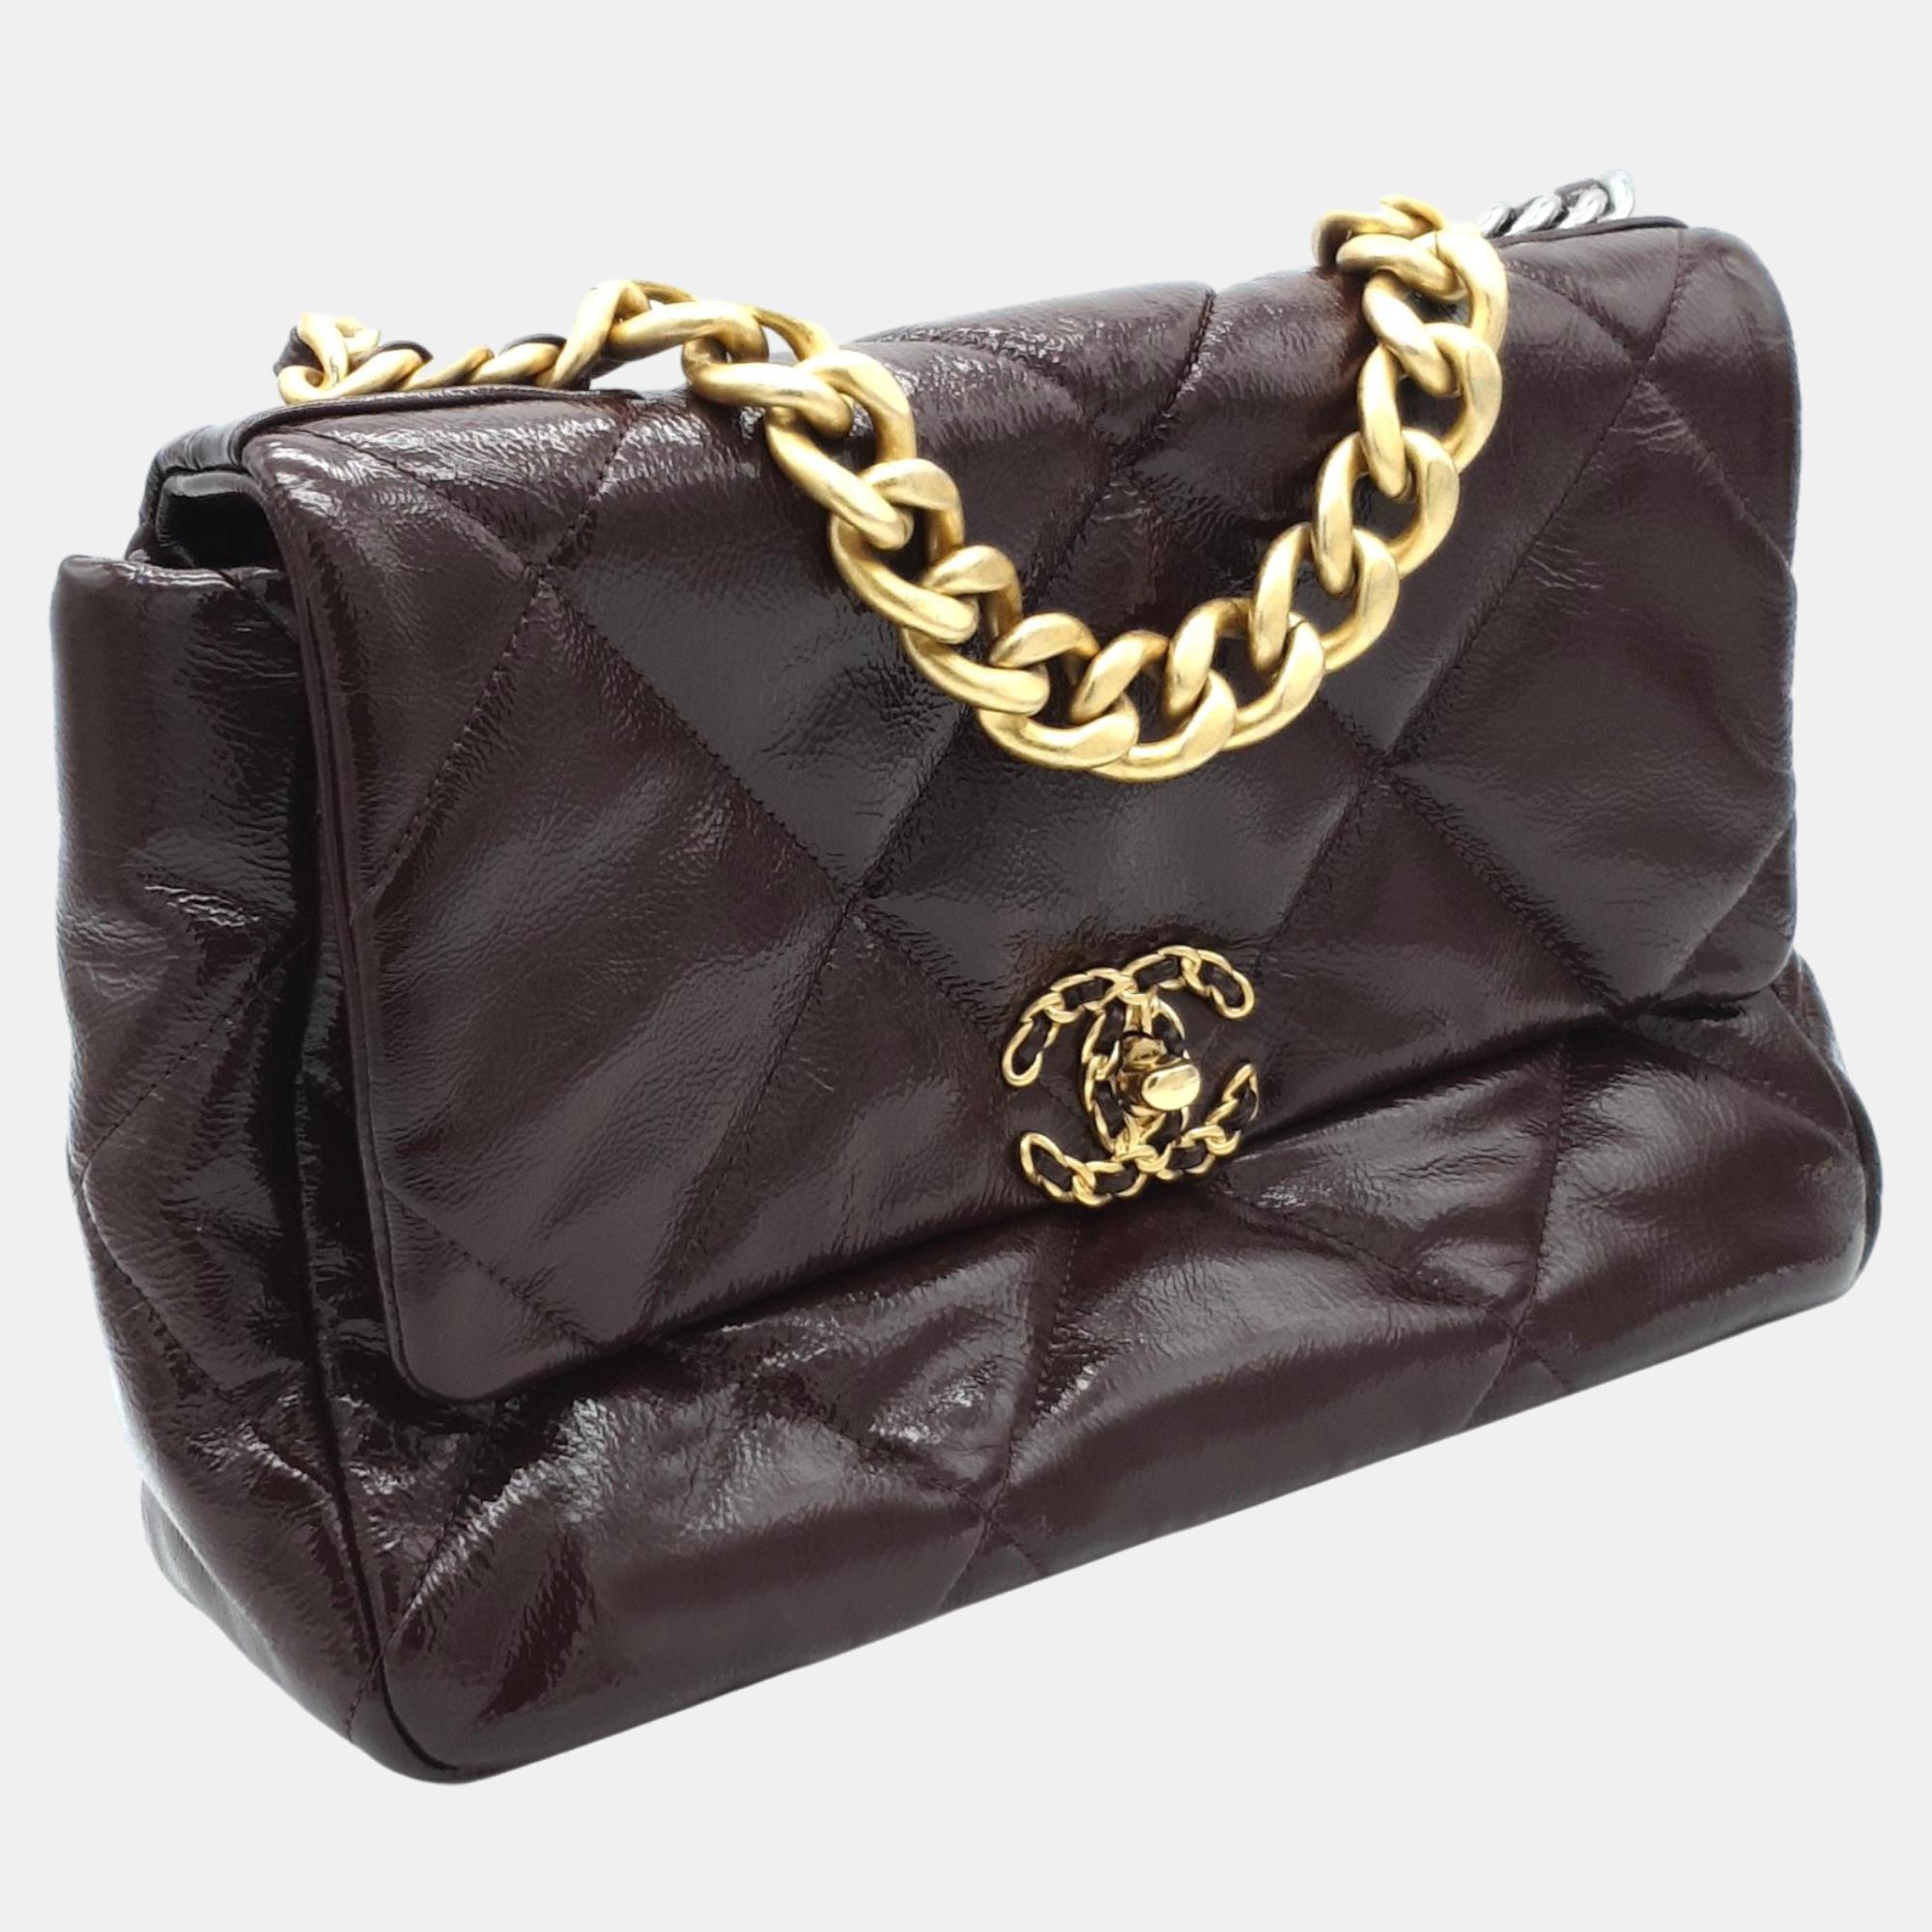 Chanel Burgundy Leather Small 19 Flap Shoulder Bag